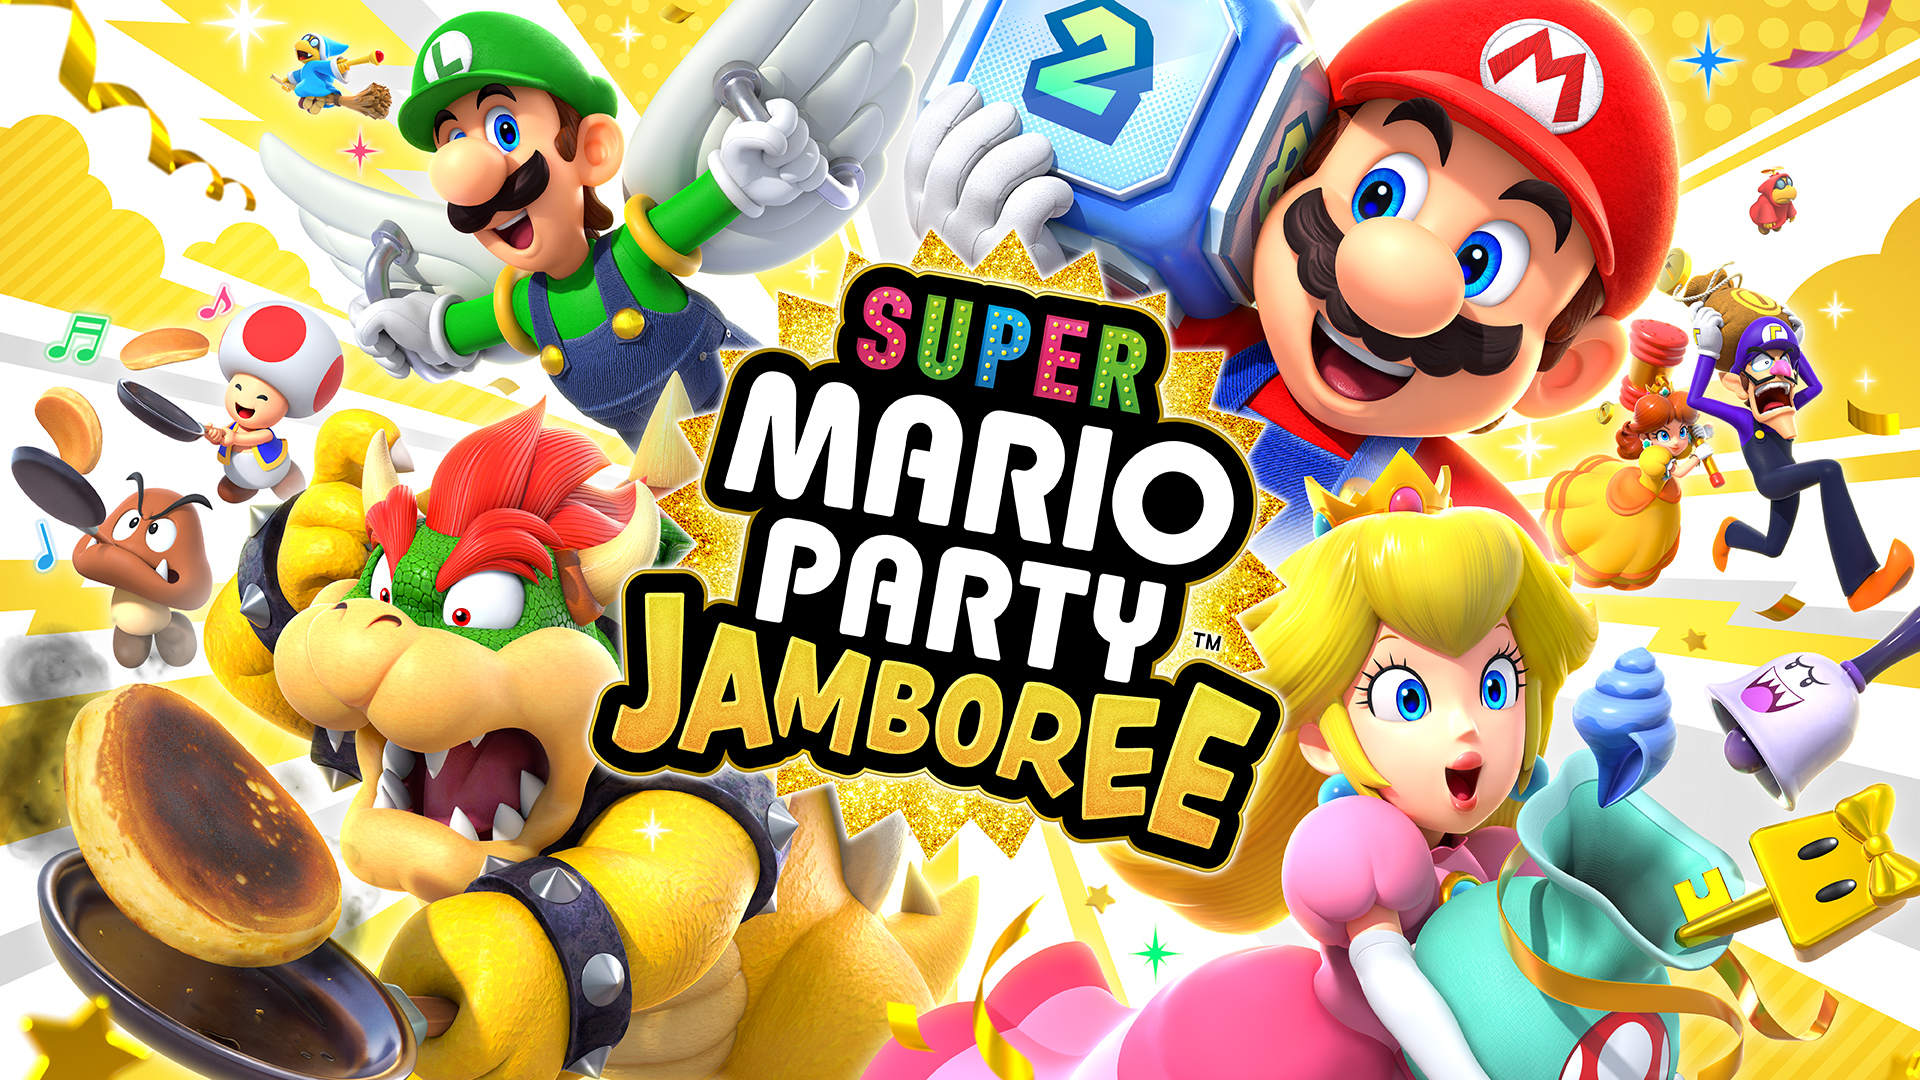 Super Mario Party Jamboree Keyart